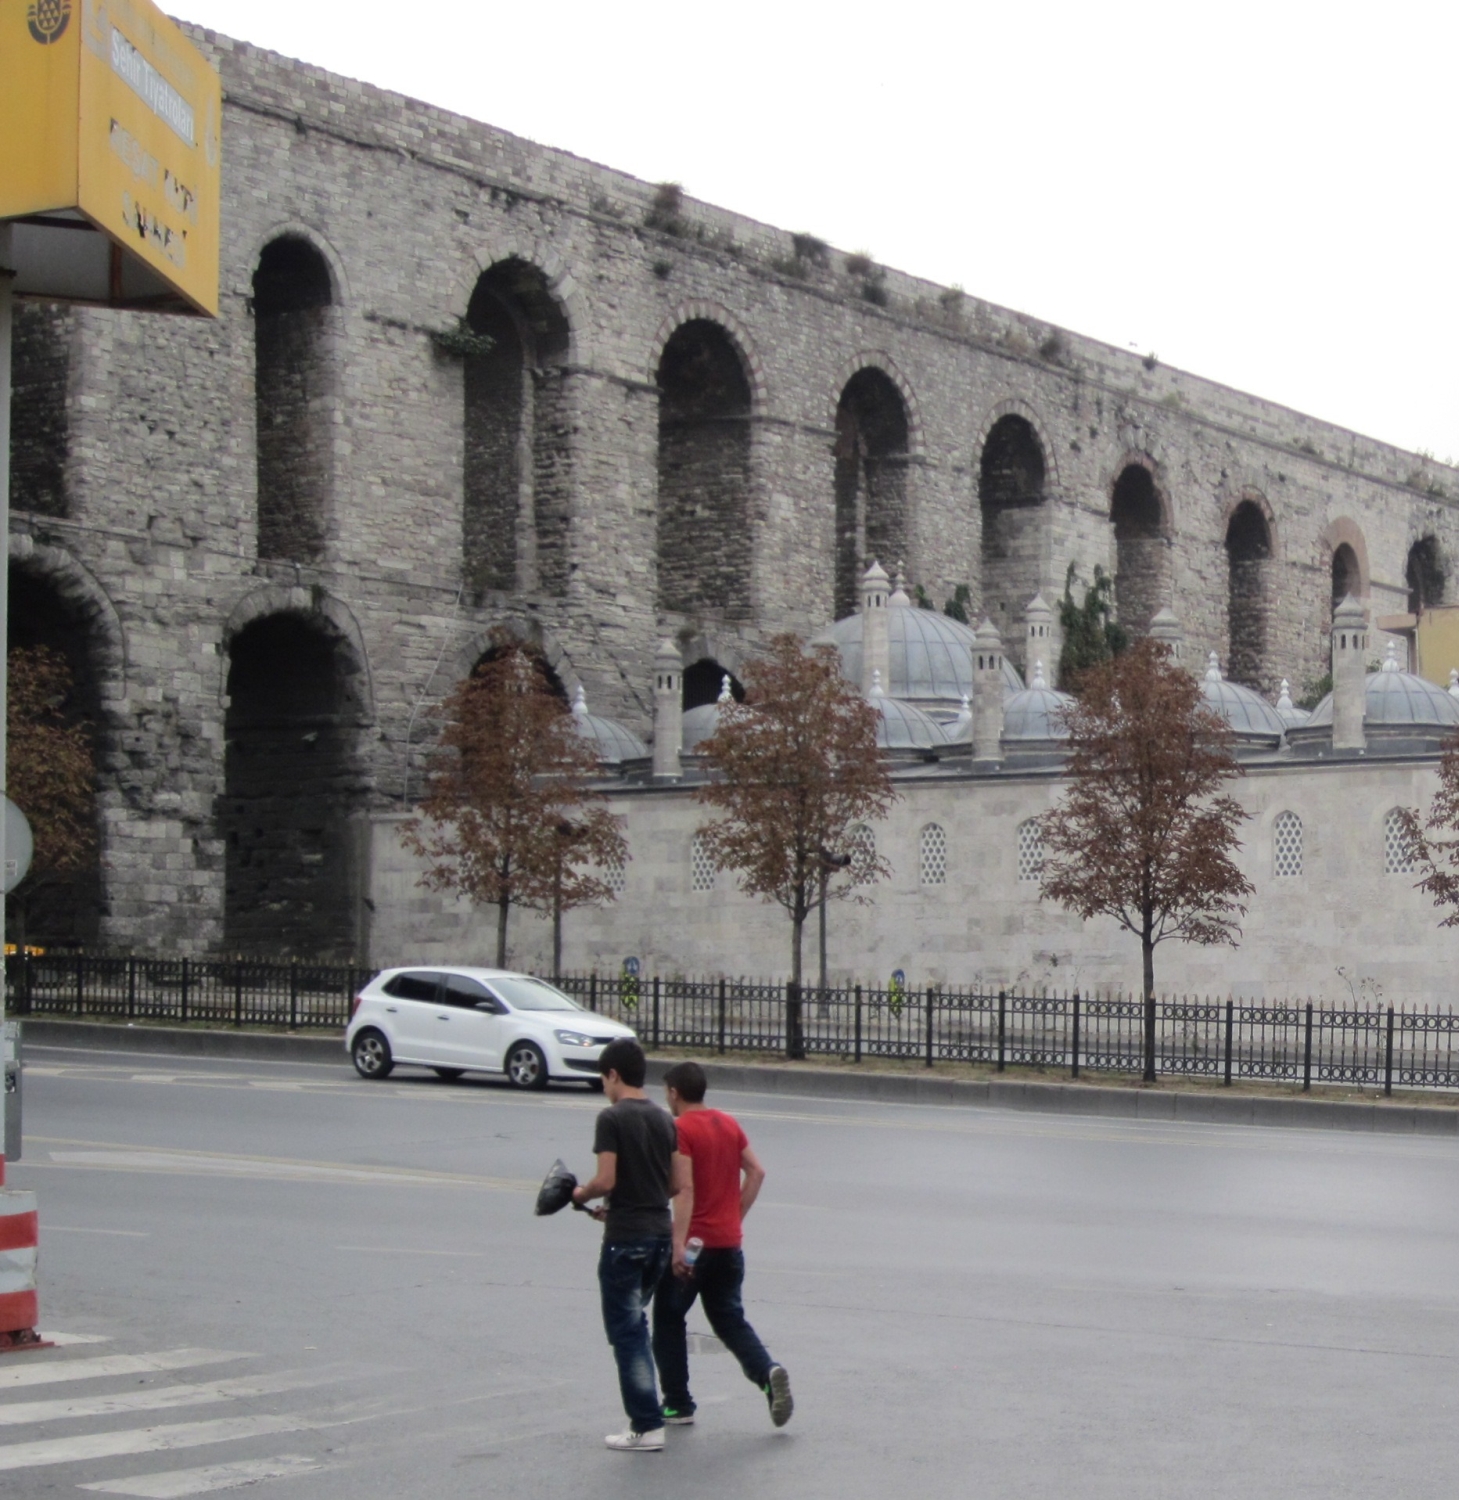 View of aqueduct from Ataturk Boulevard